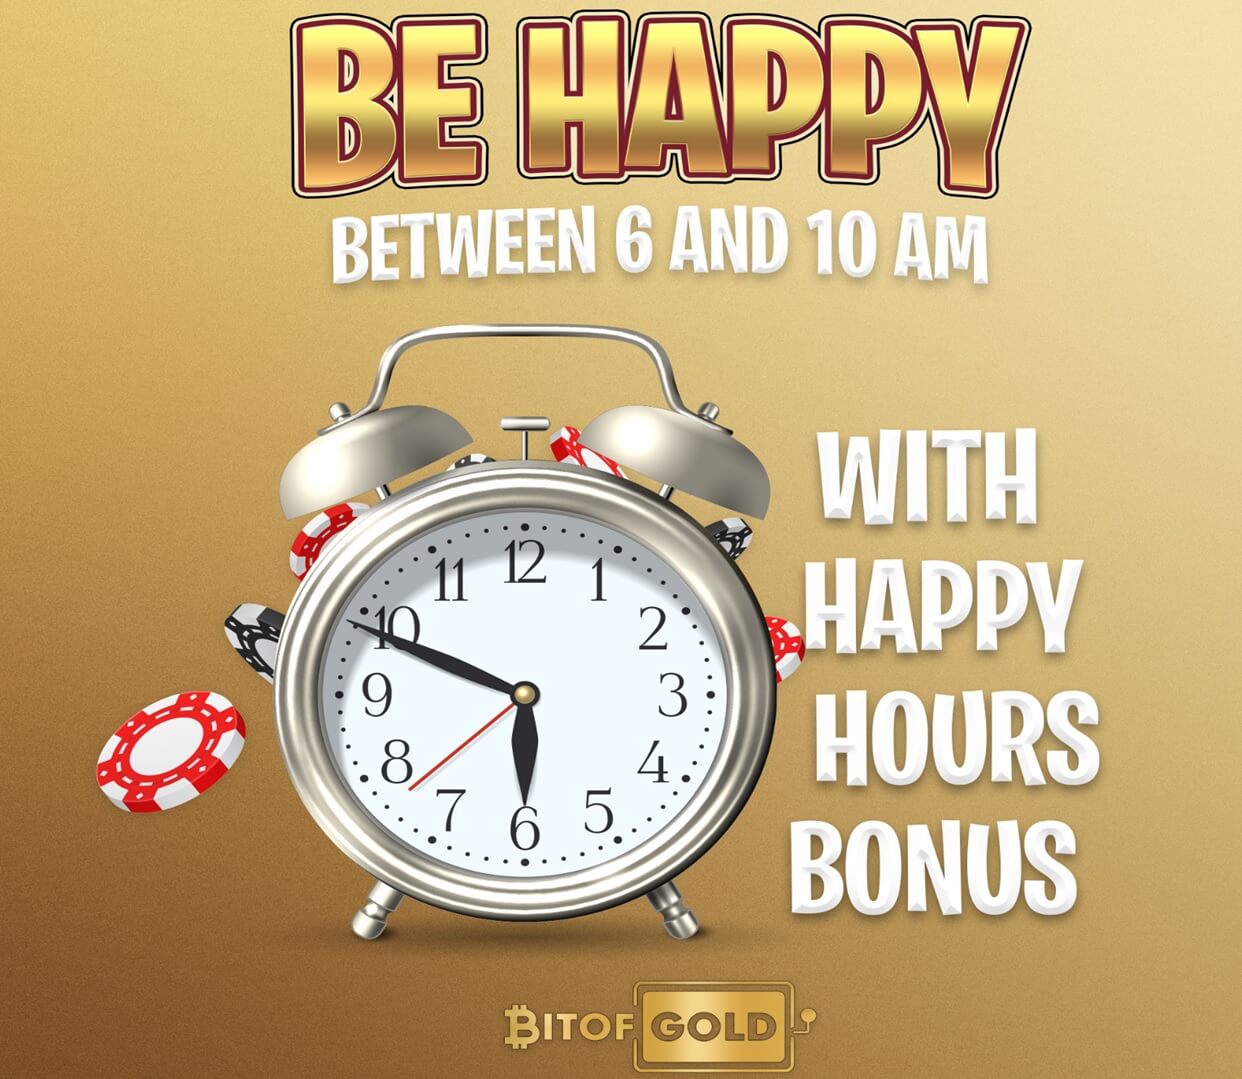 BitofGold Happy Hour Bonus